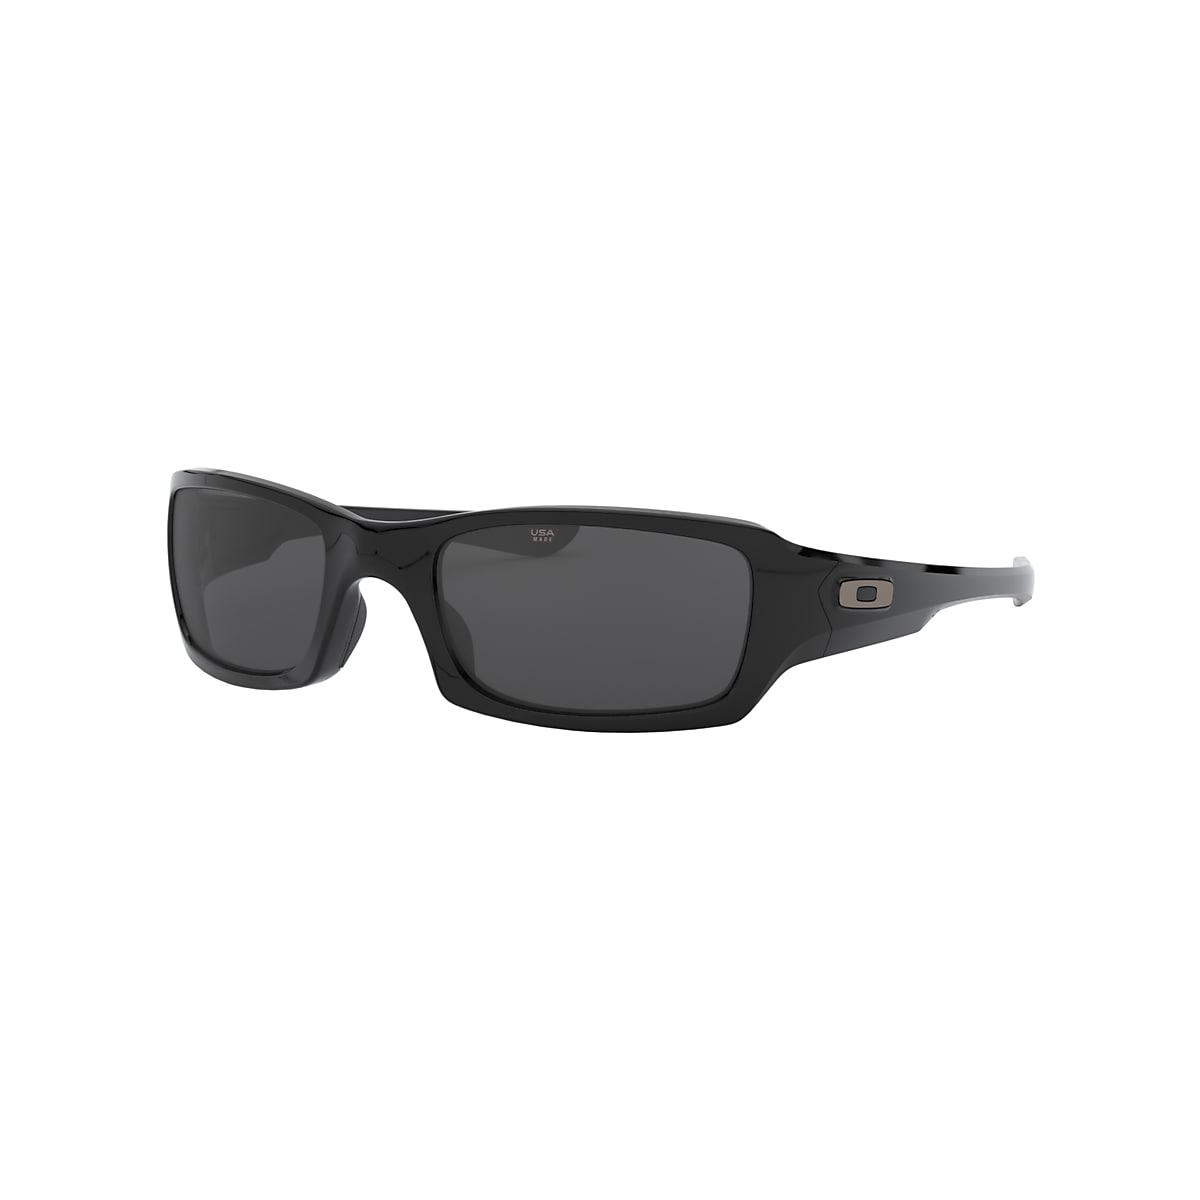 Oakley Fives Squared® 54 Grey & Polished Black Sunglasses | Sunglass Hut USA